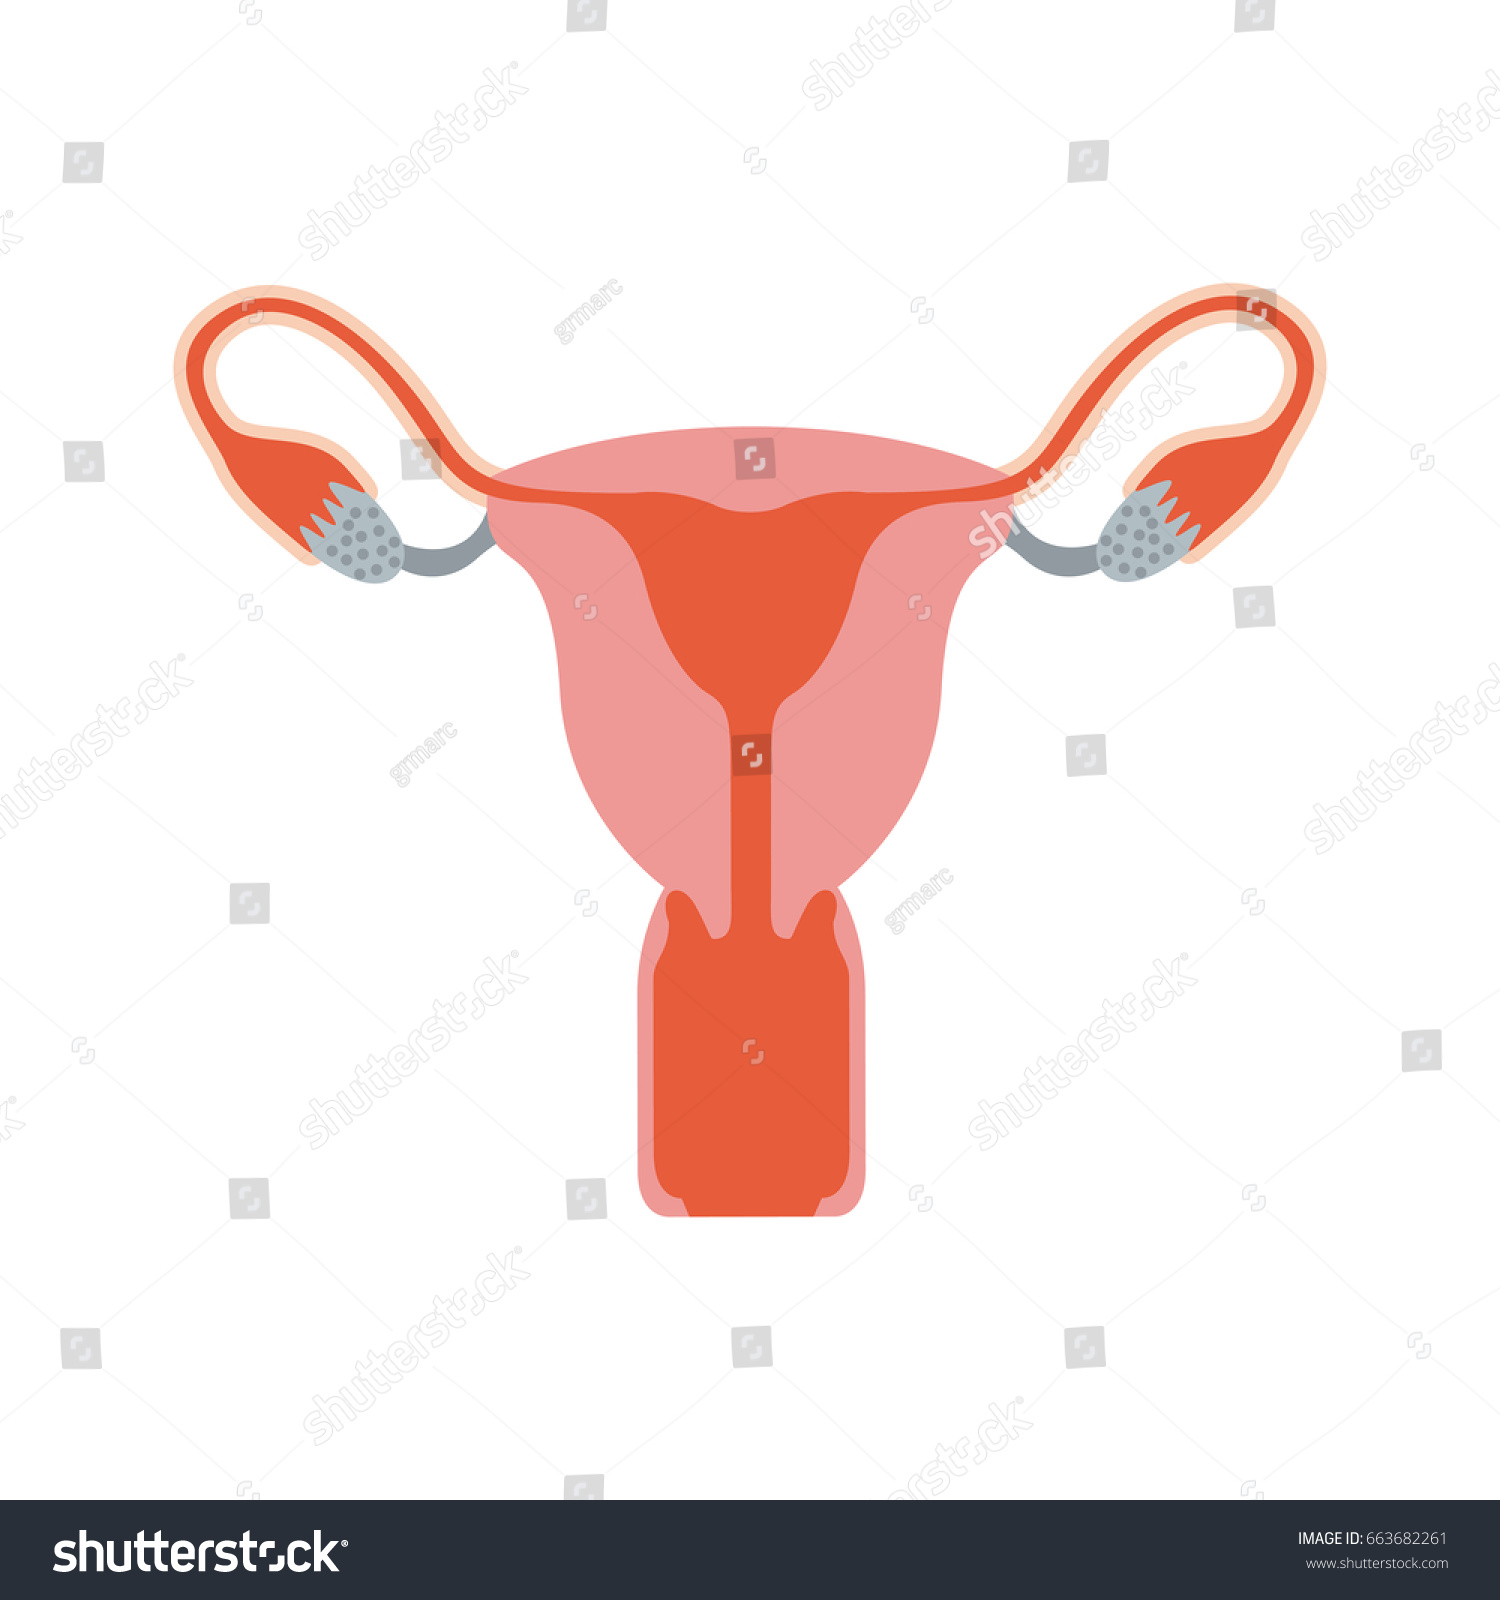 Vektor Stok Colorful Silhouette Female Reproductive System Vector Tanpa Royalti 663682261 0525